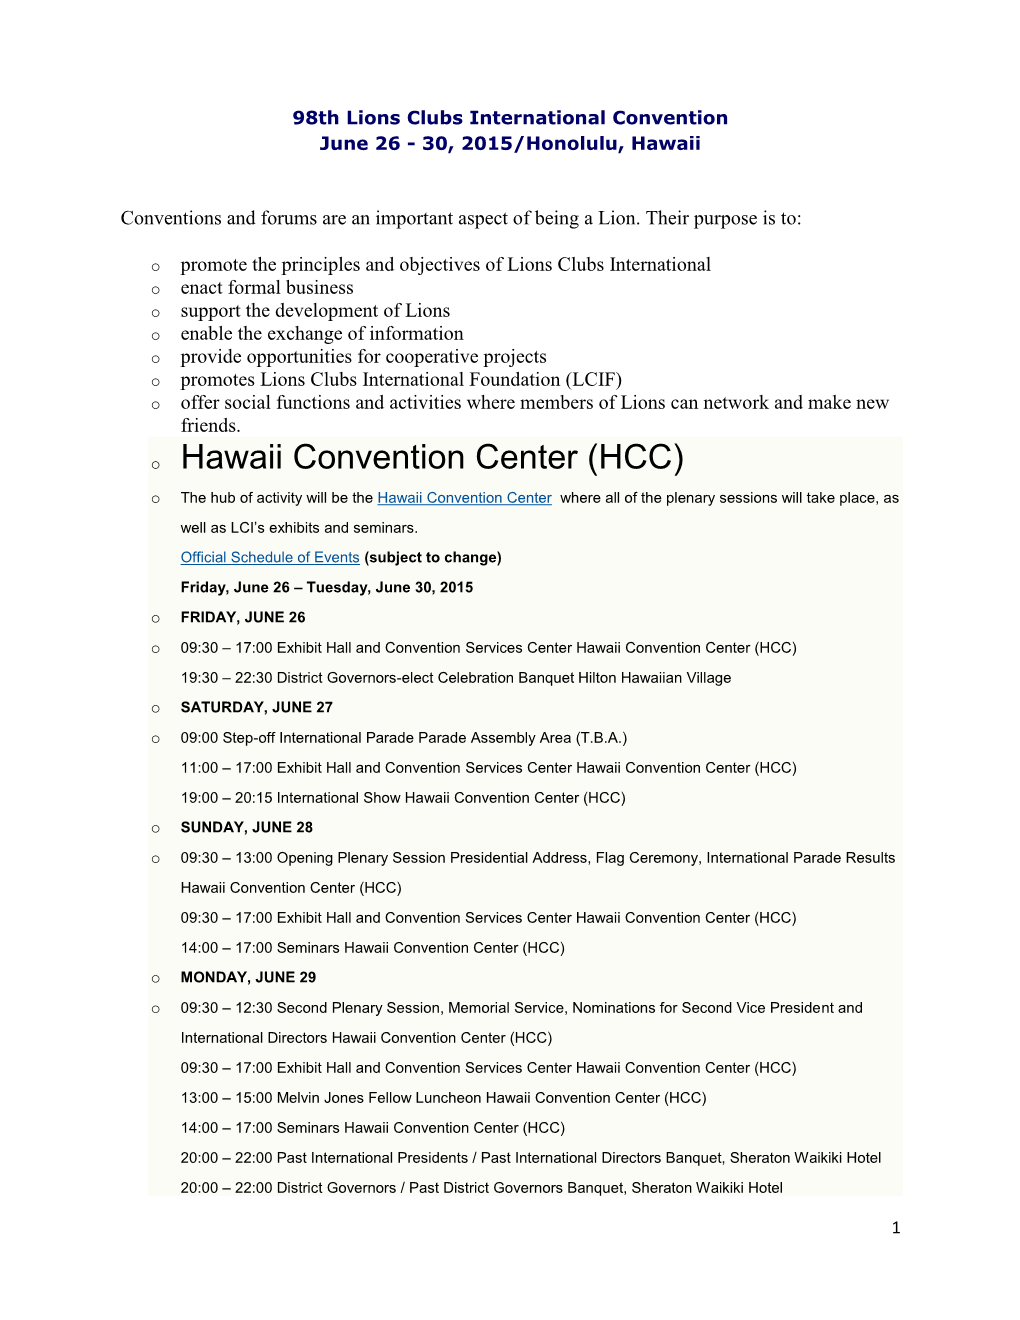 O Hawaii Convention Center